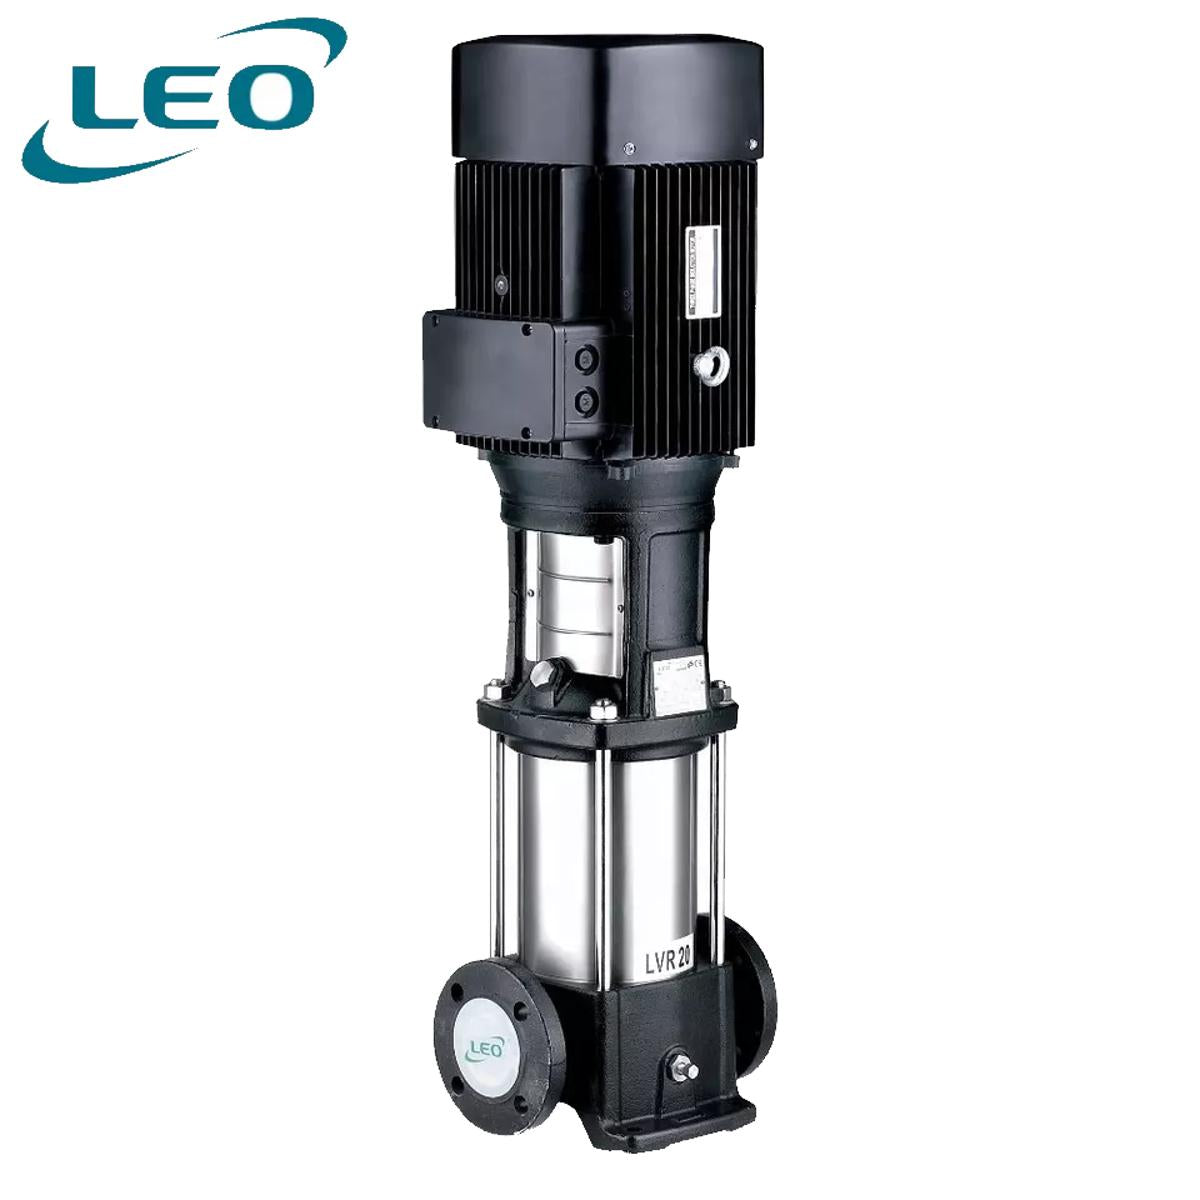 LEO - LVR-15-5 - 4000 W - 5.5 HP (IE2) -  Vertical Multistage Booster  - HIGH PRESSURE Pump - SIZE 2" X  2" - THREE PHASE - European STANDARD